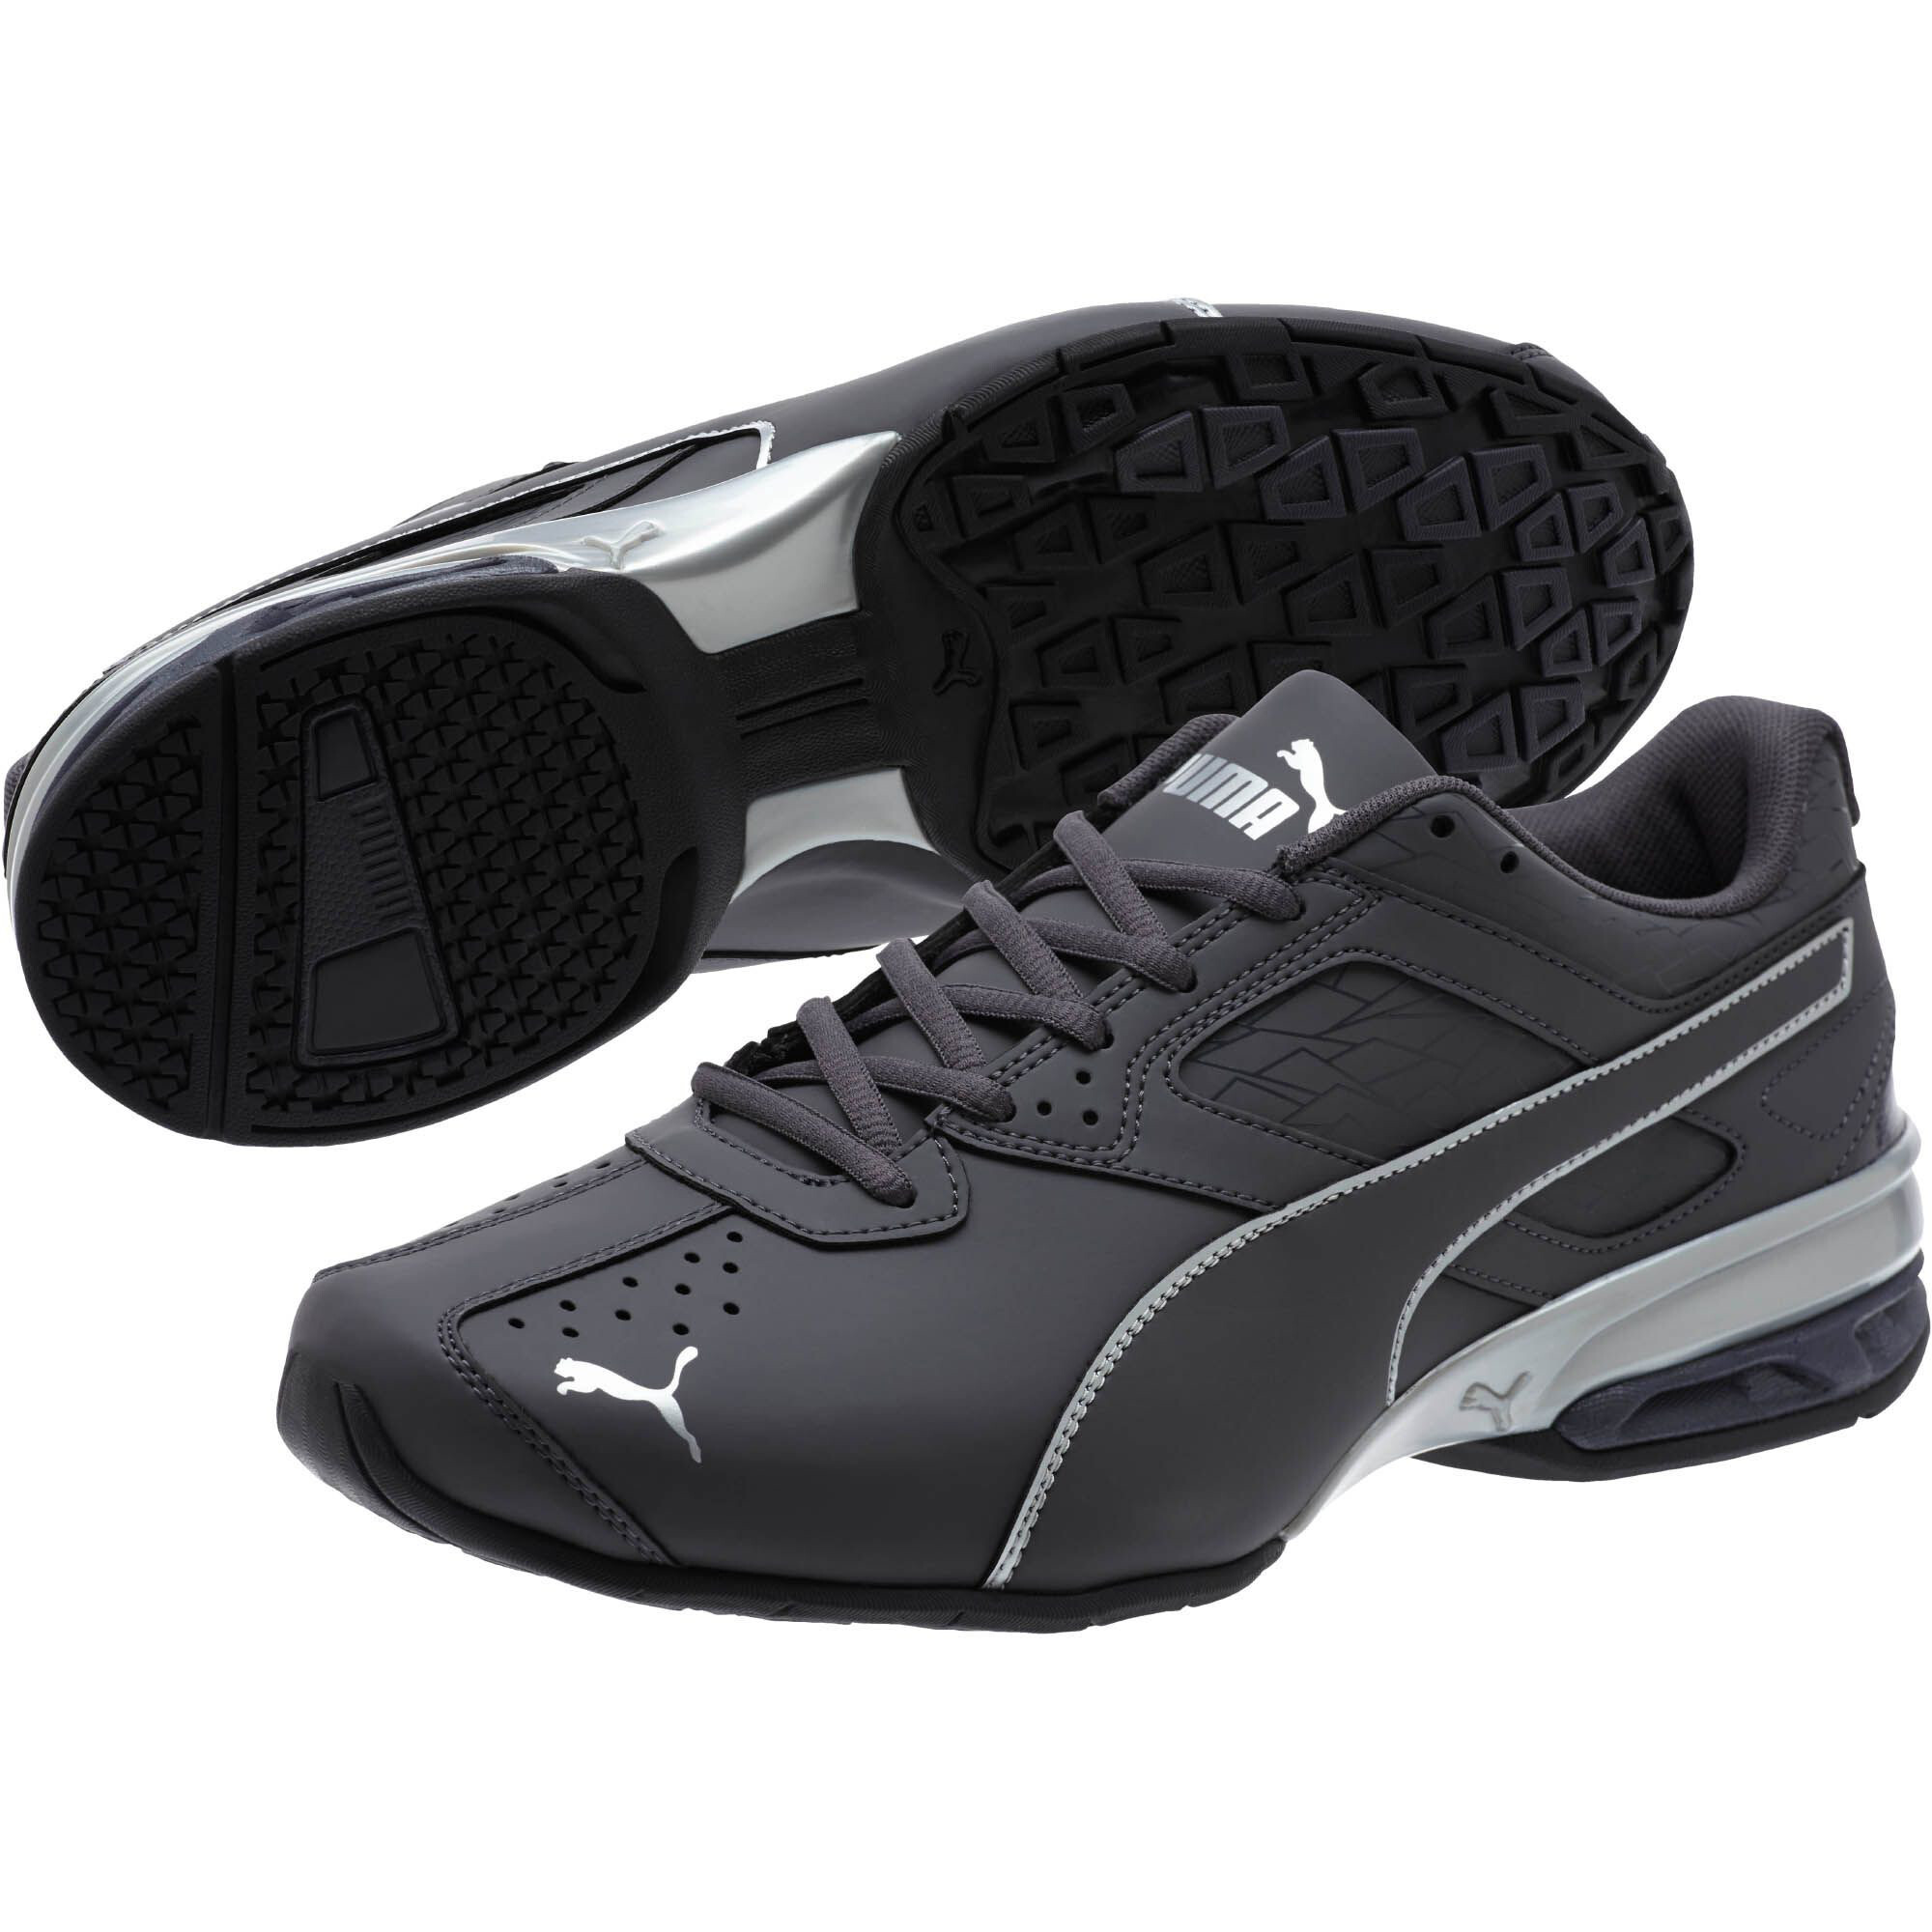 PUMA Tazon 6 Fracture FM Men's Sneakers Men Shoe Running | eBay